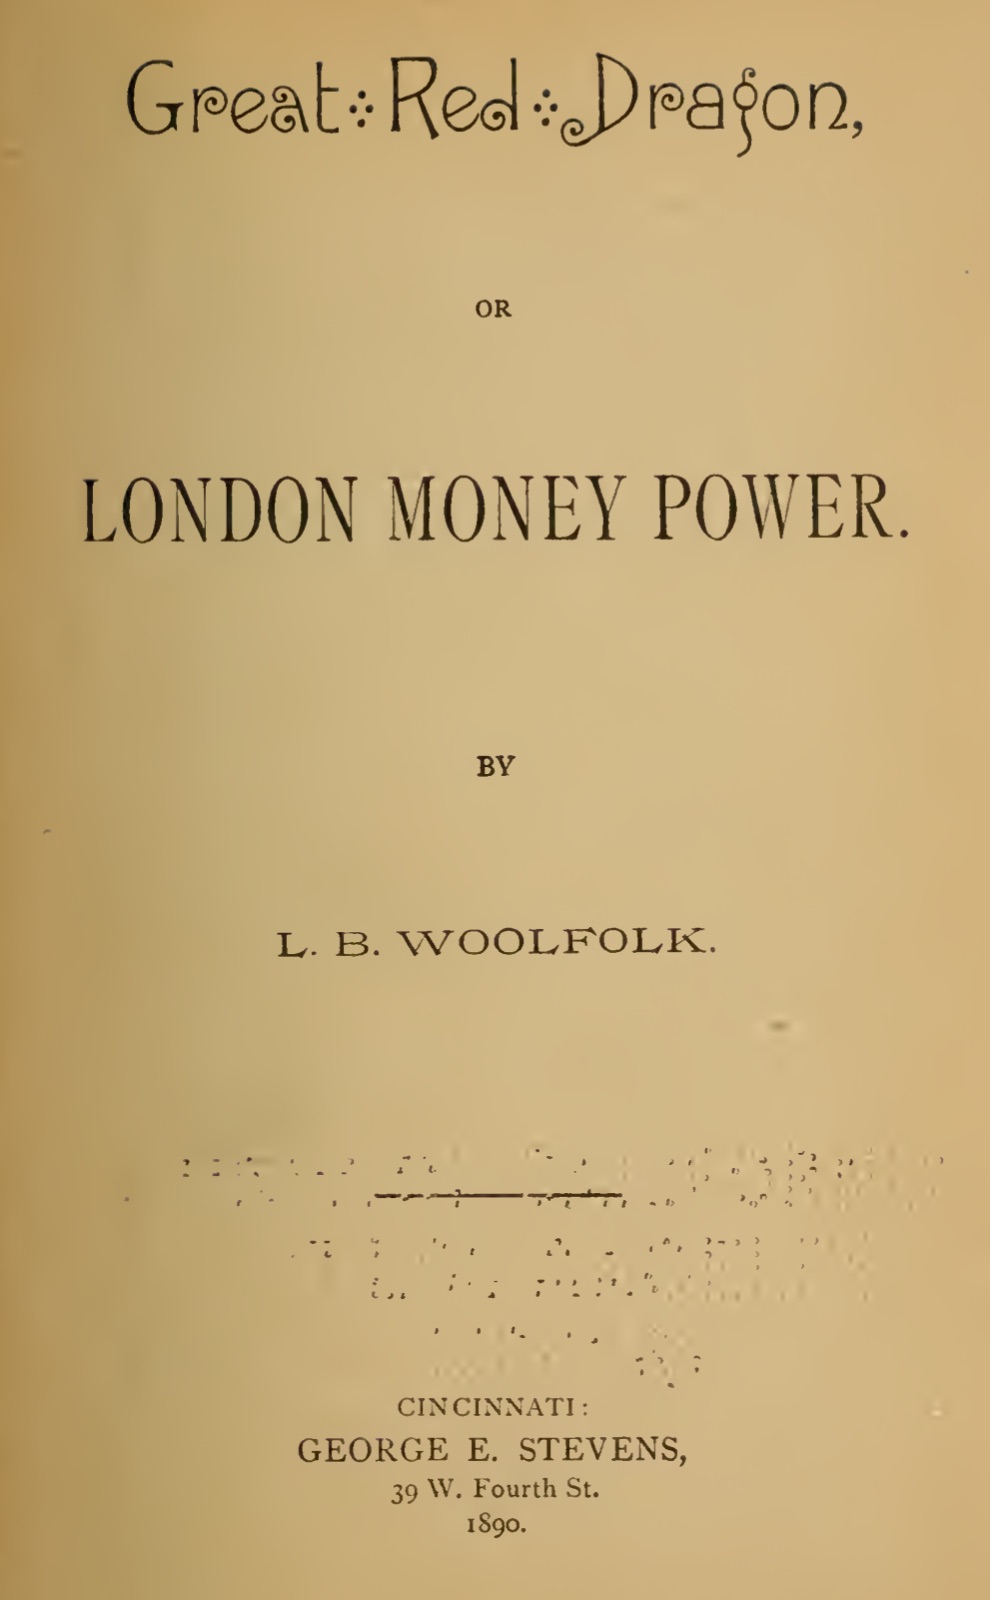 Great Red Dragon, or London Money Power (1890) by L. B. Woolfolk